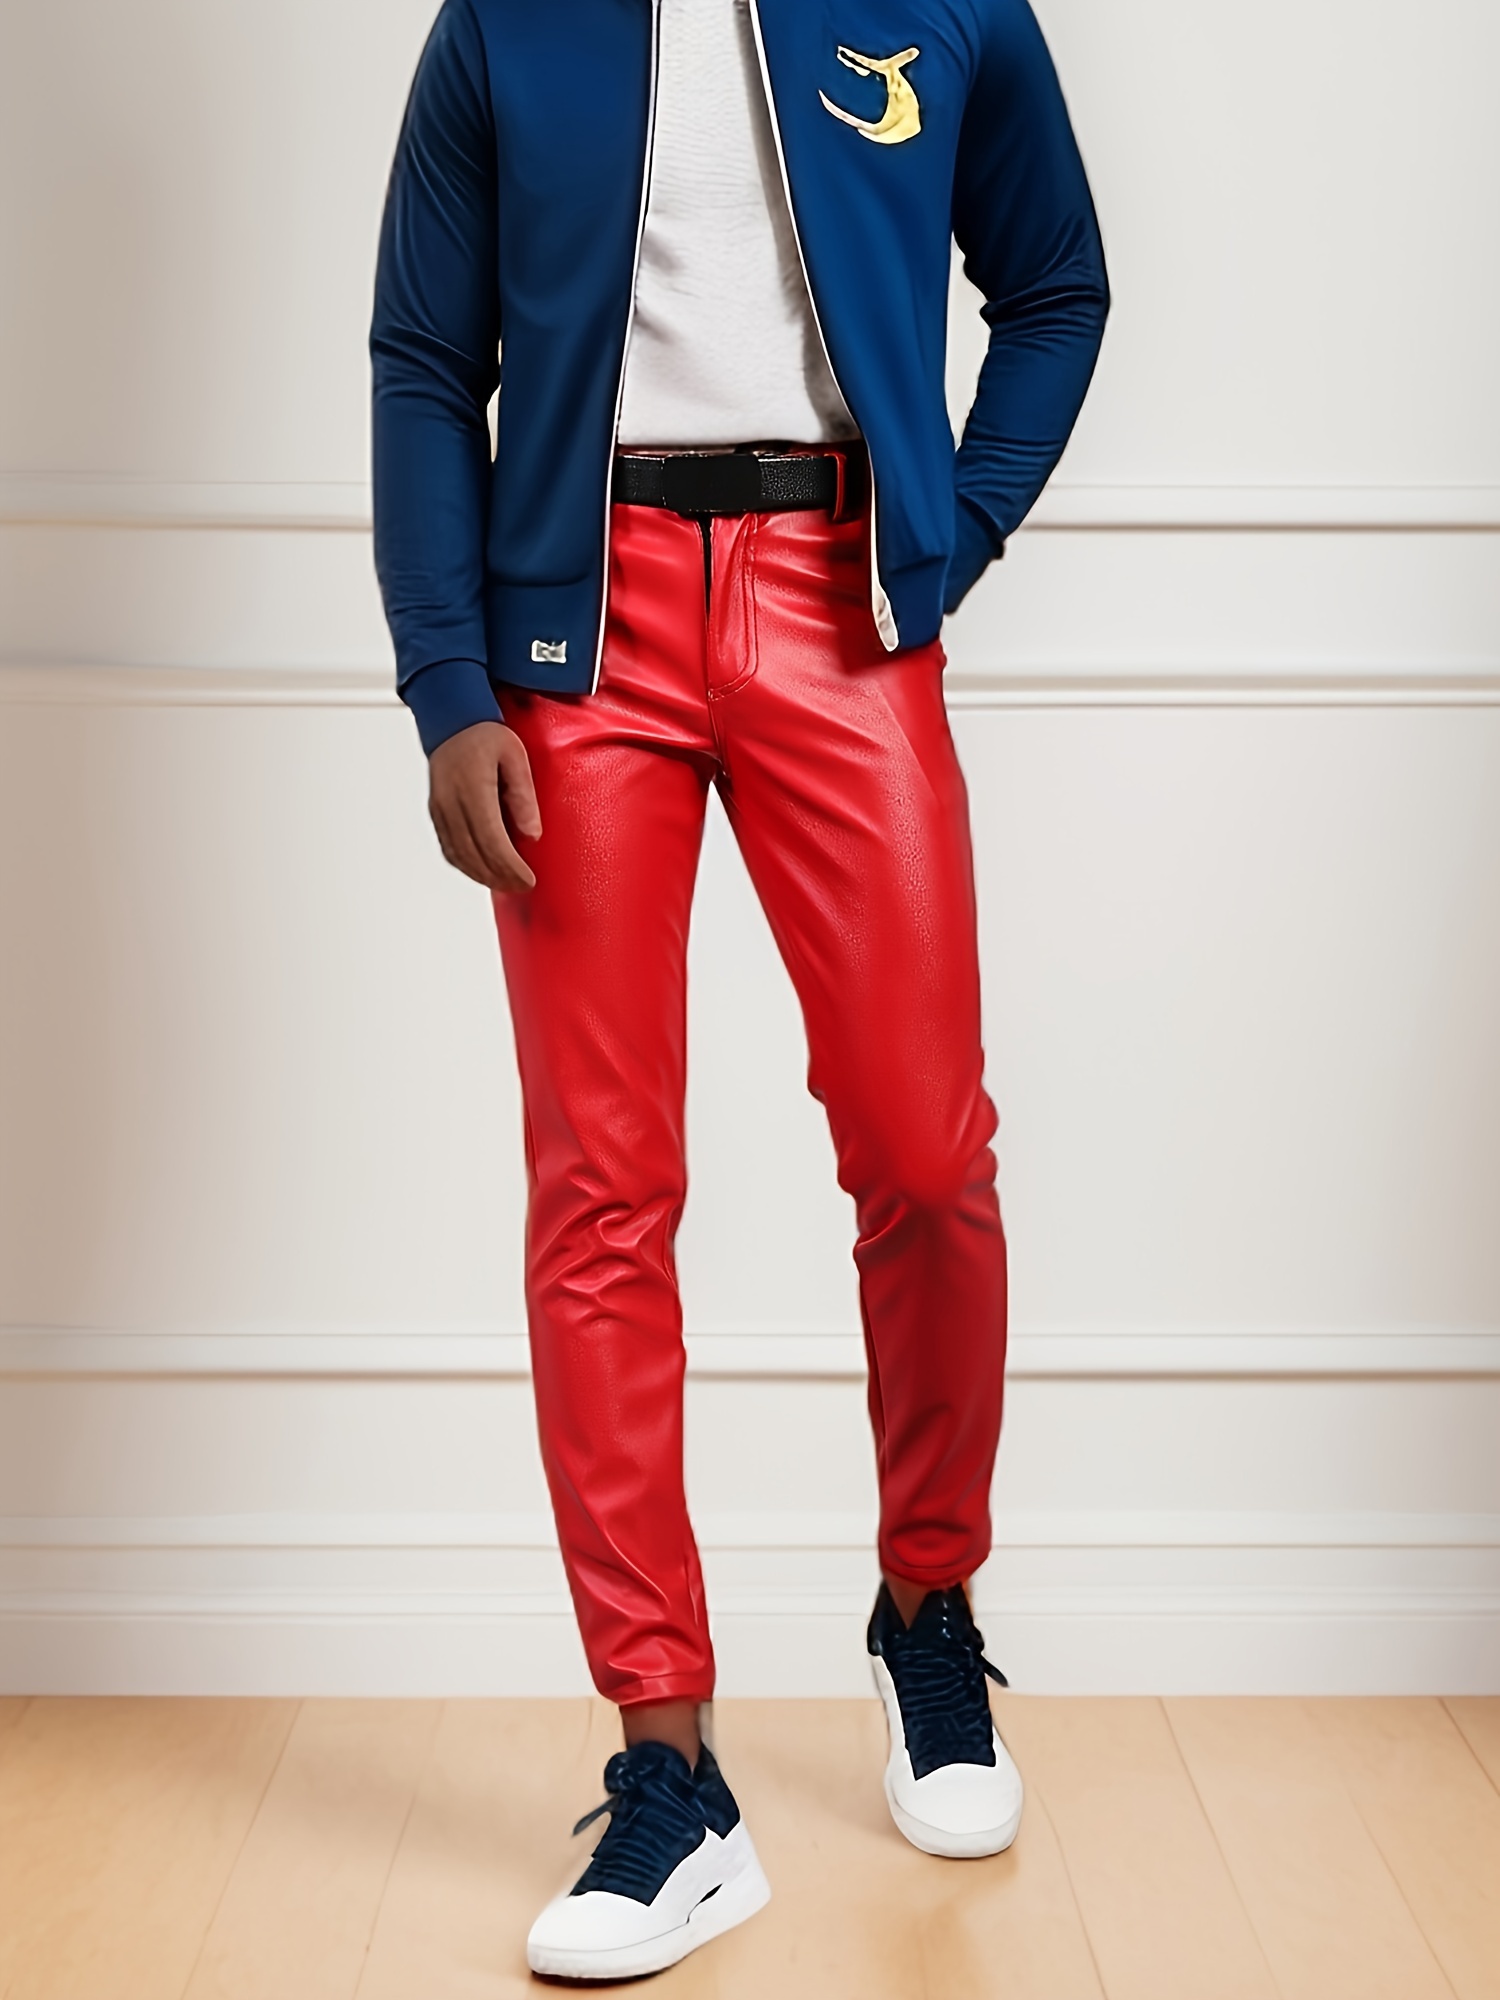 Men's Chic Pu Leather Pants Street Style High Stretch Skinny - Temu